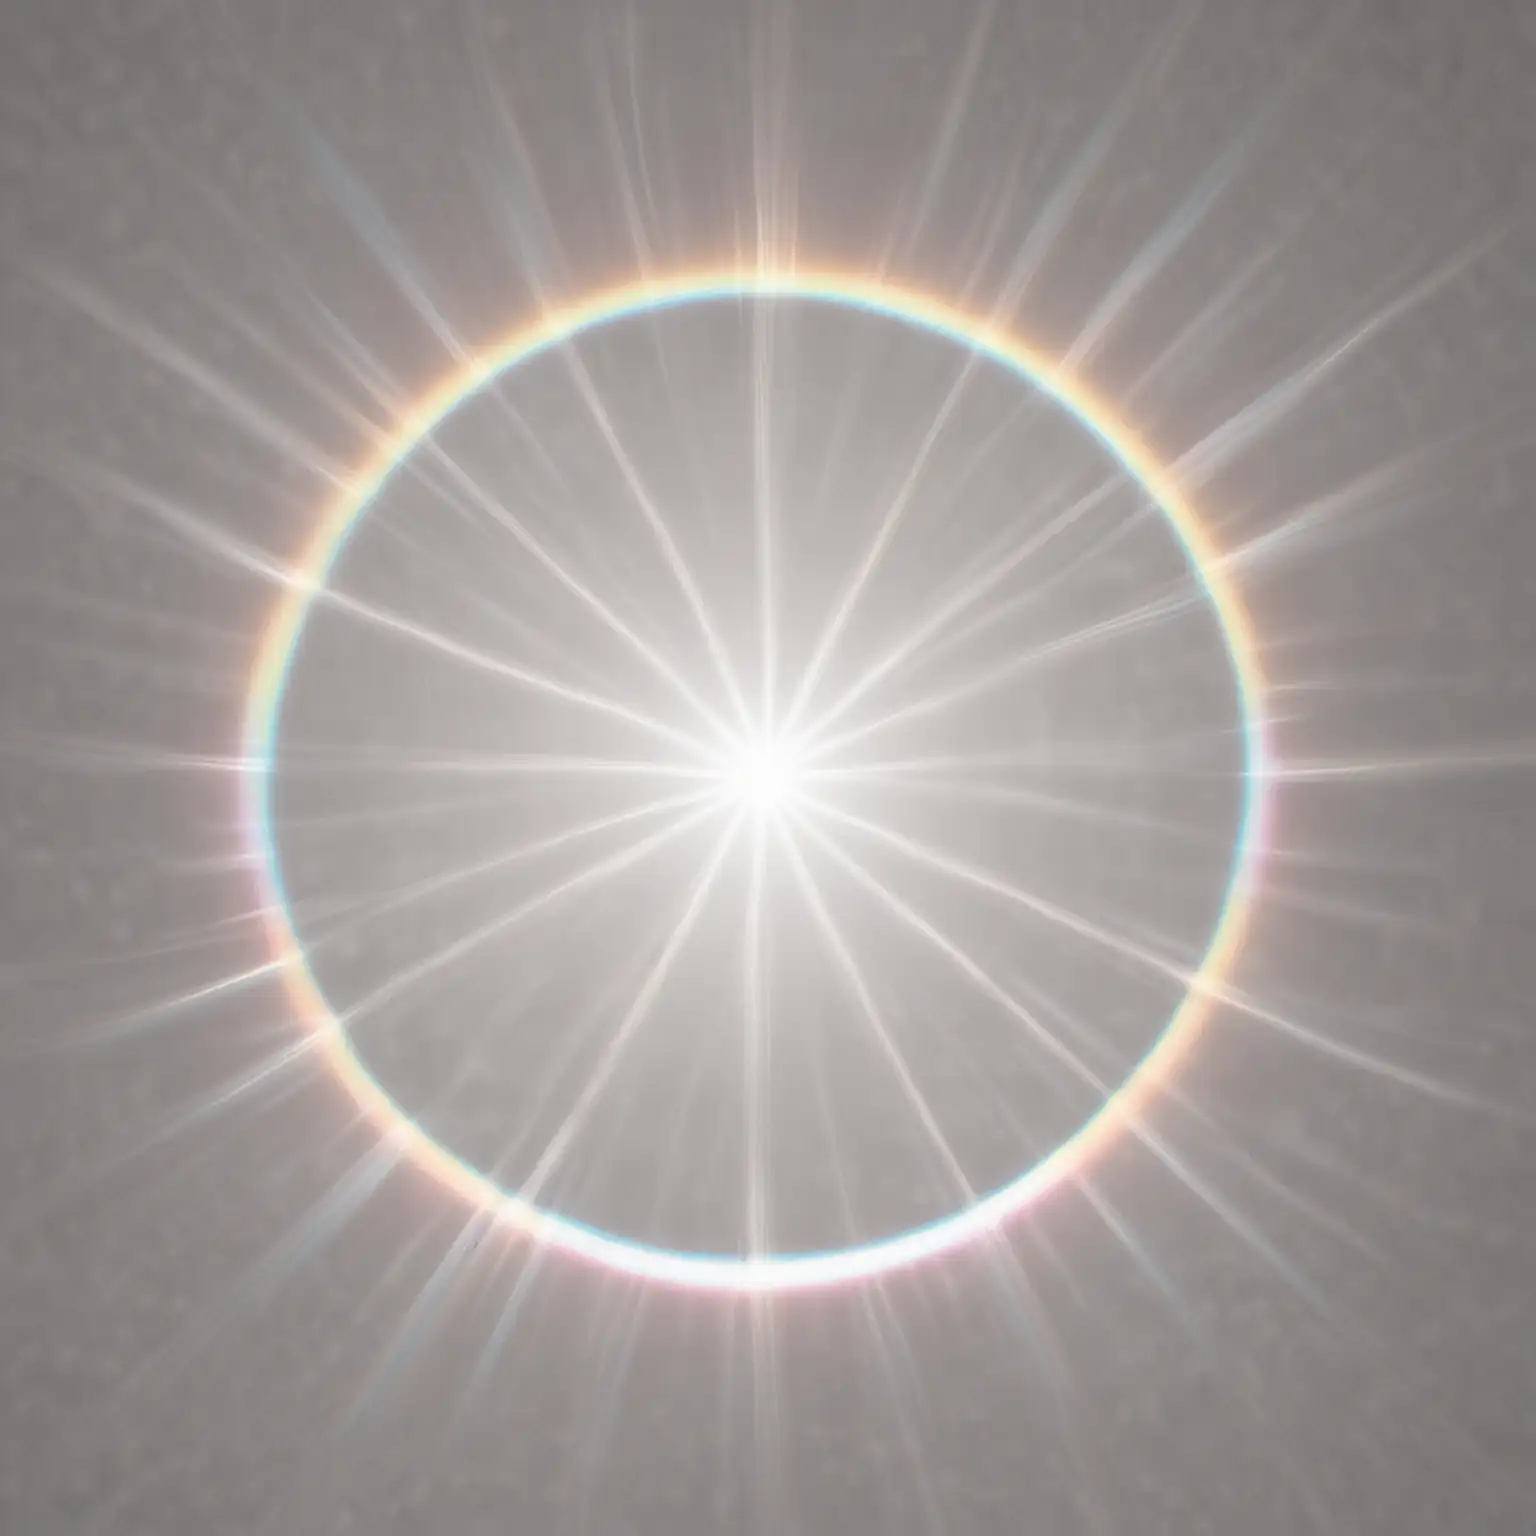 Radiant White Sphere with Rainbow Light Rays